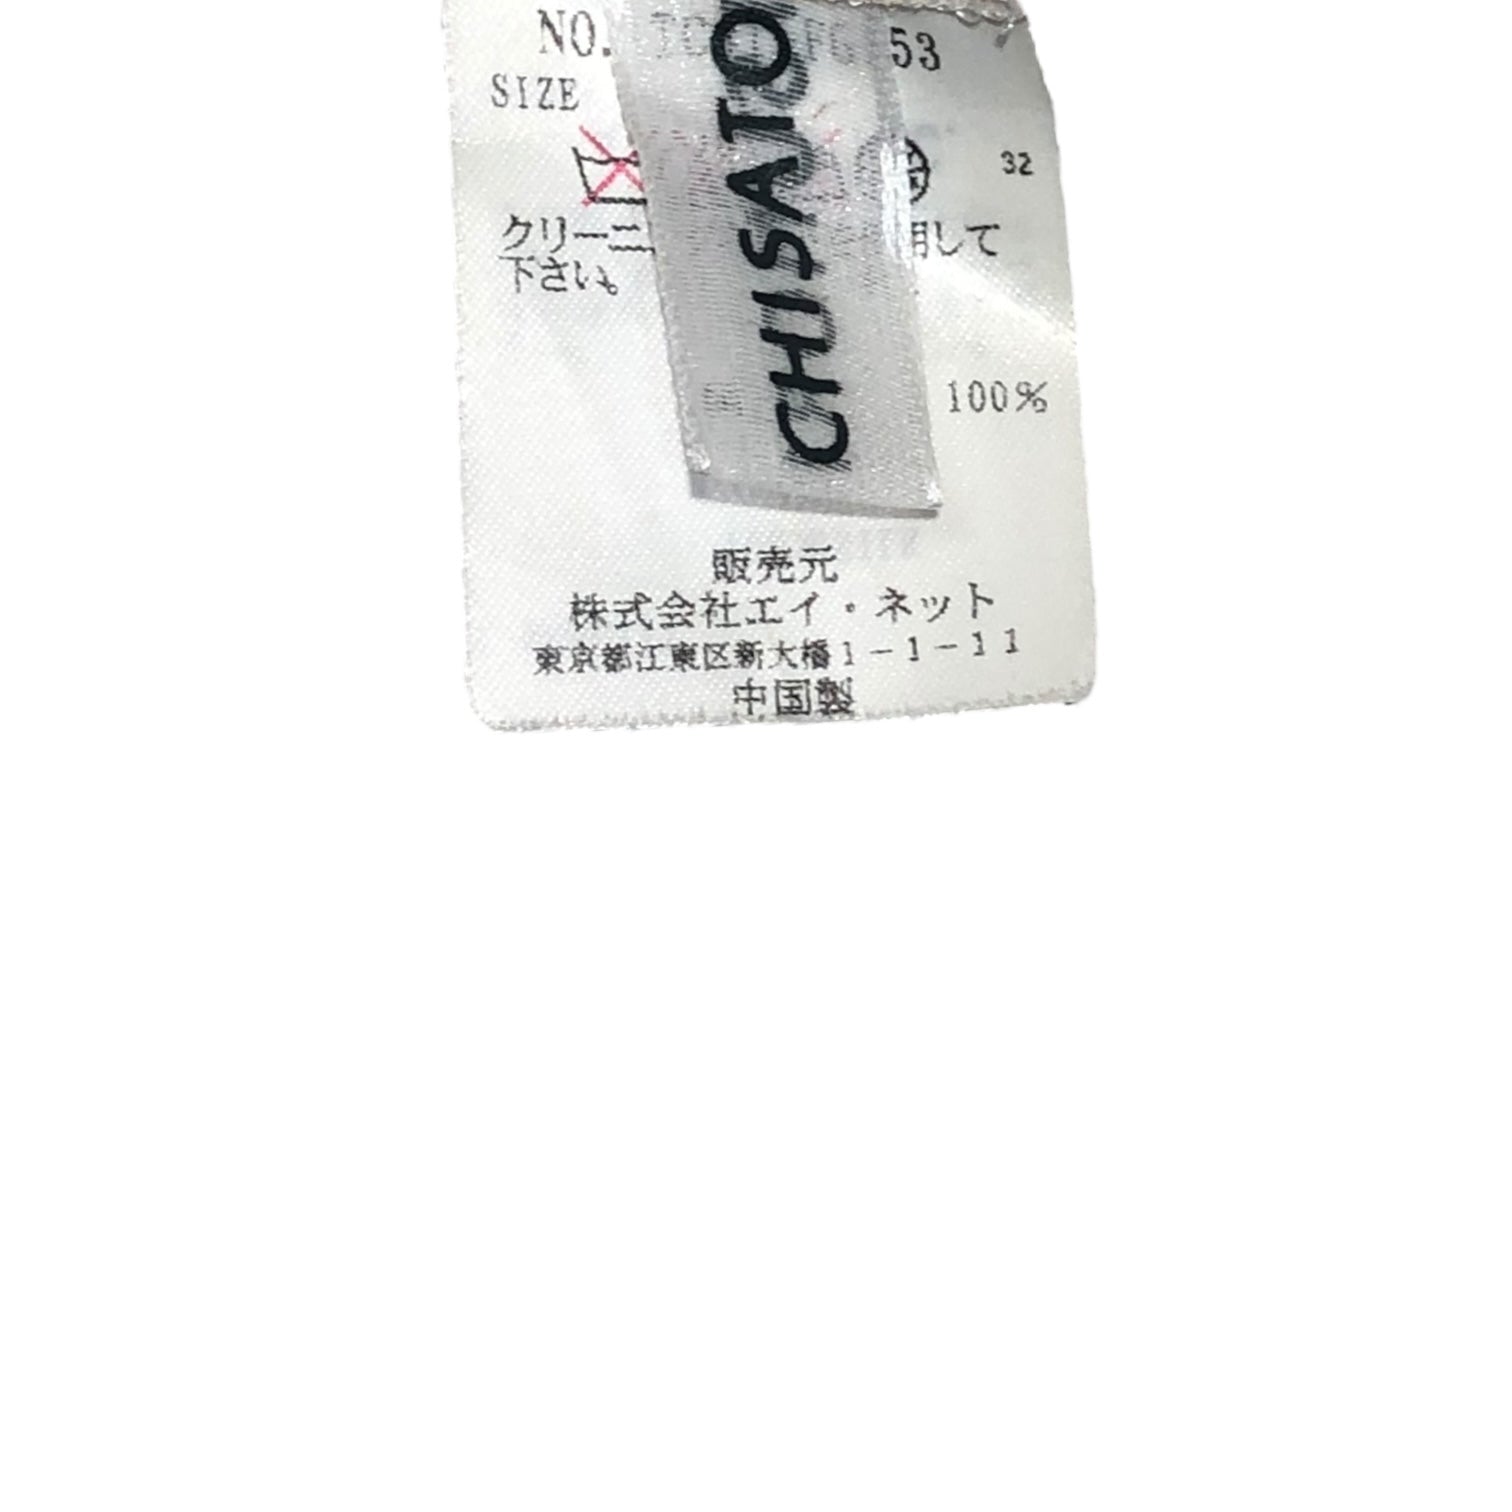 TSUMORI CHISATO(ツモリチサト) 04SSシルクスカート TC41-FG153 2(M) アイボリー